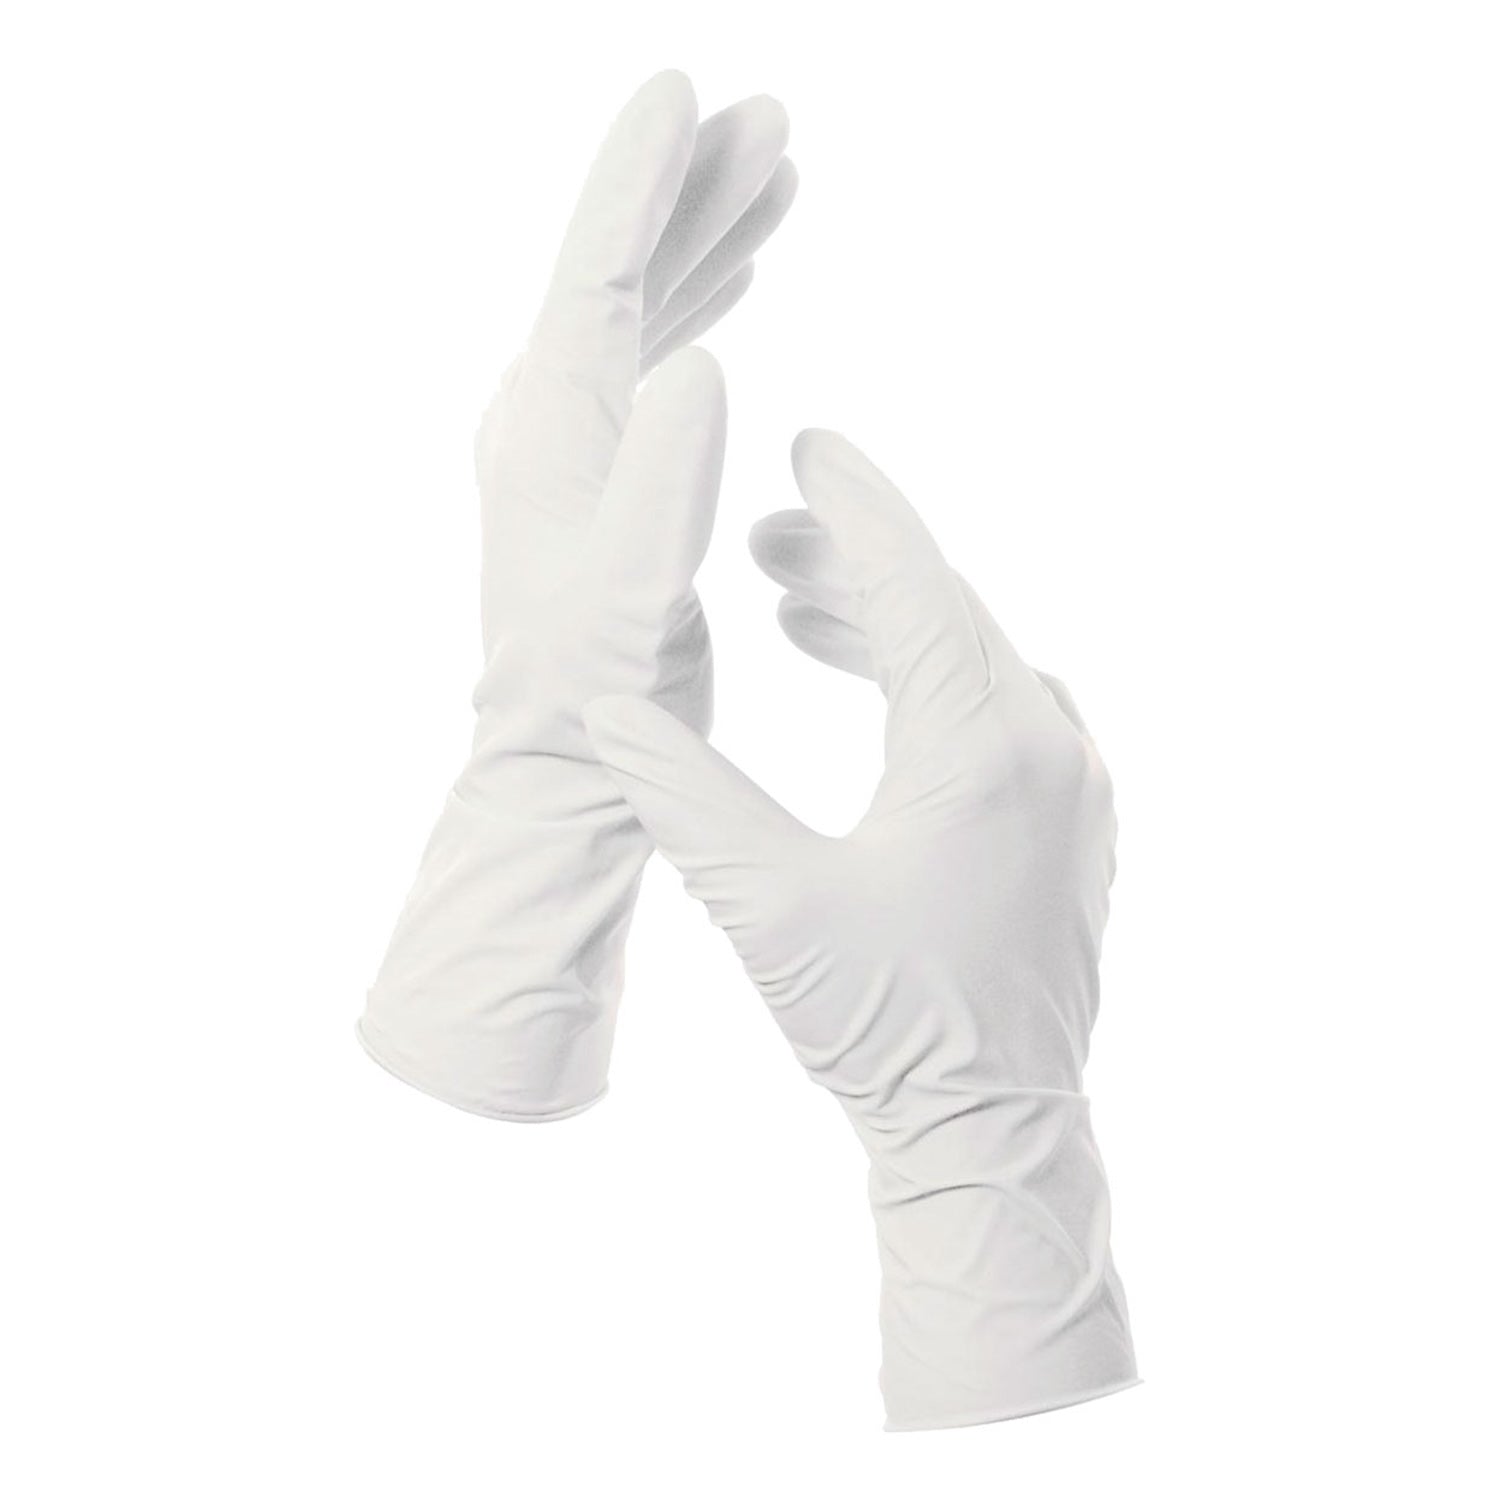 Premier Soft Vinyl Powder Free Gloves | Sterile | Latex Free | Large | Pack of 50 Pairs (1)